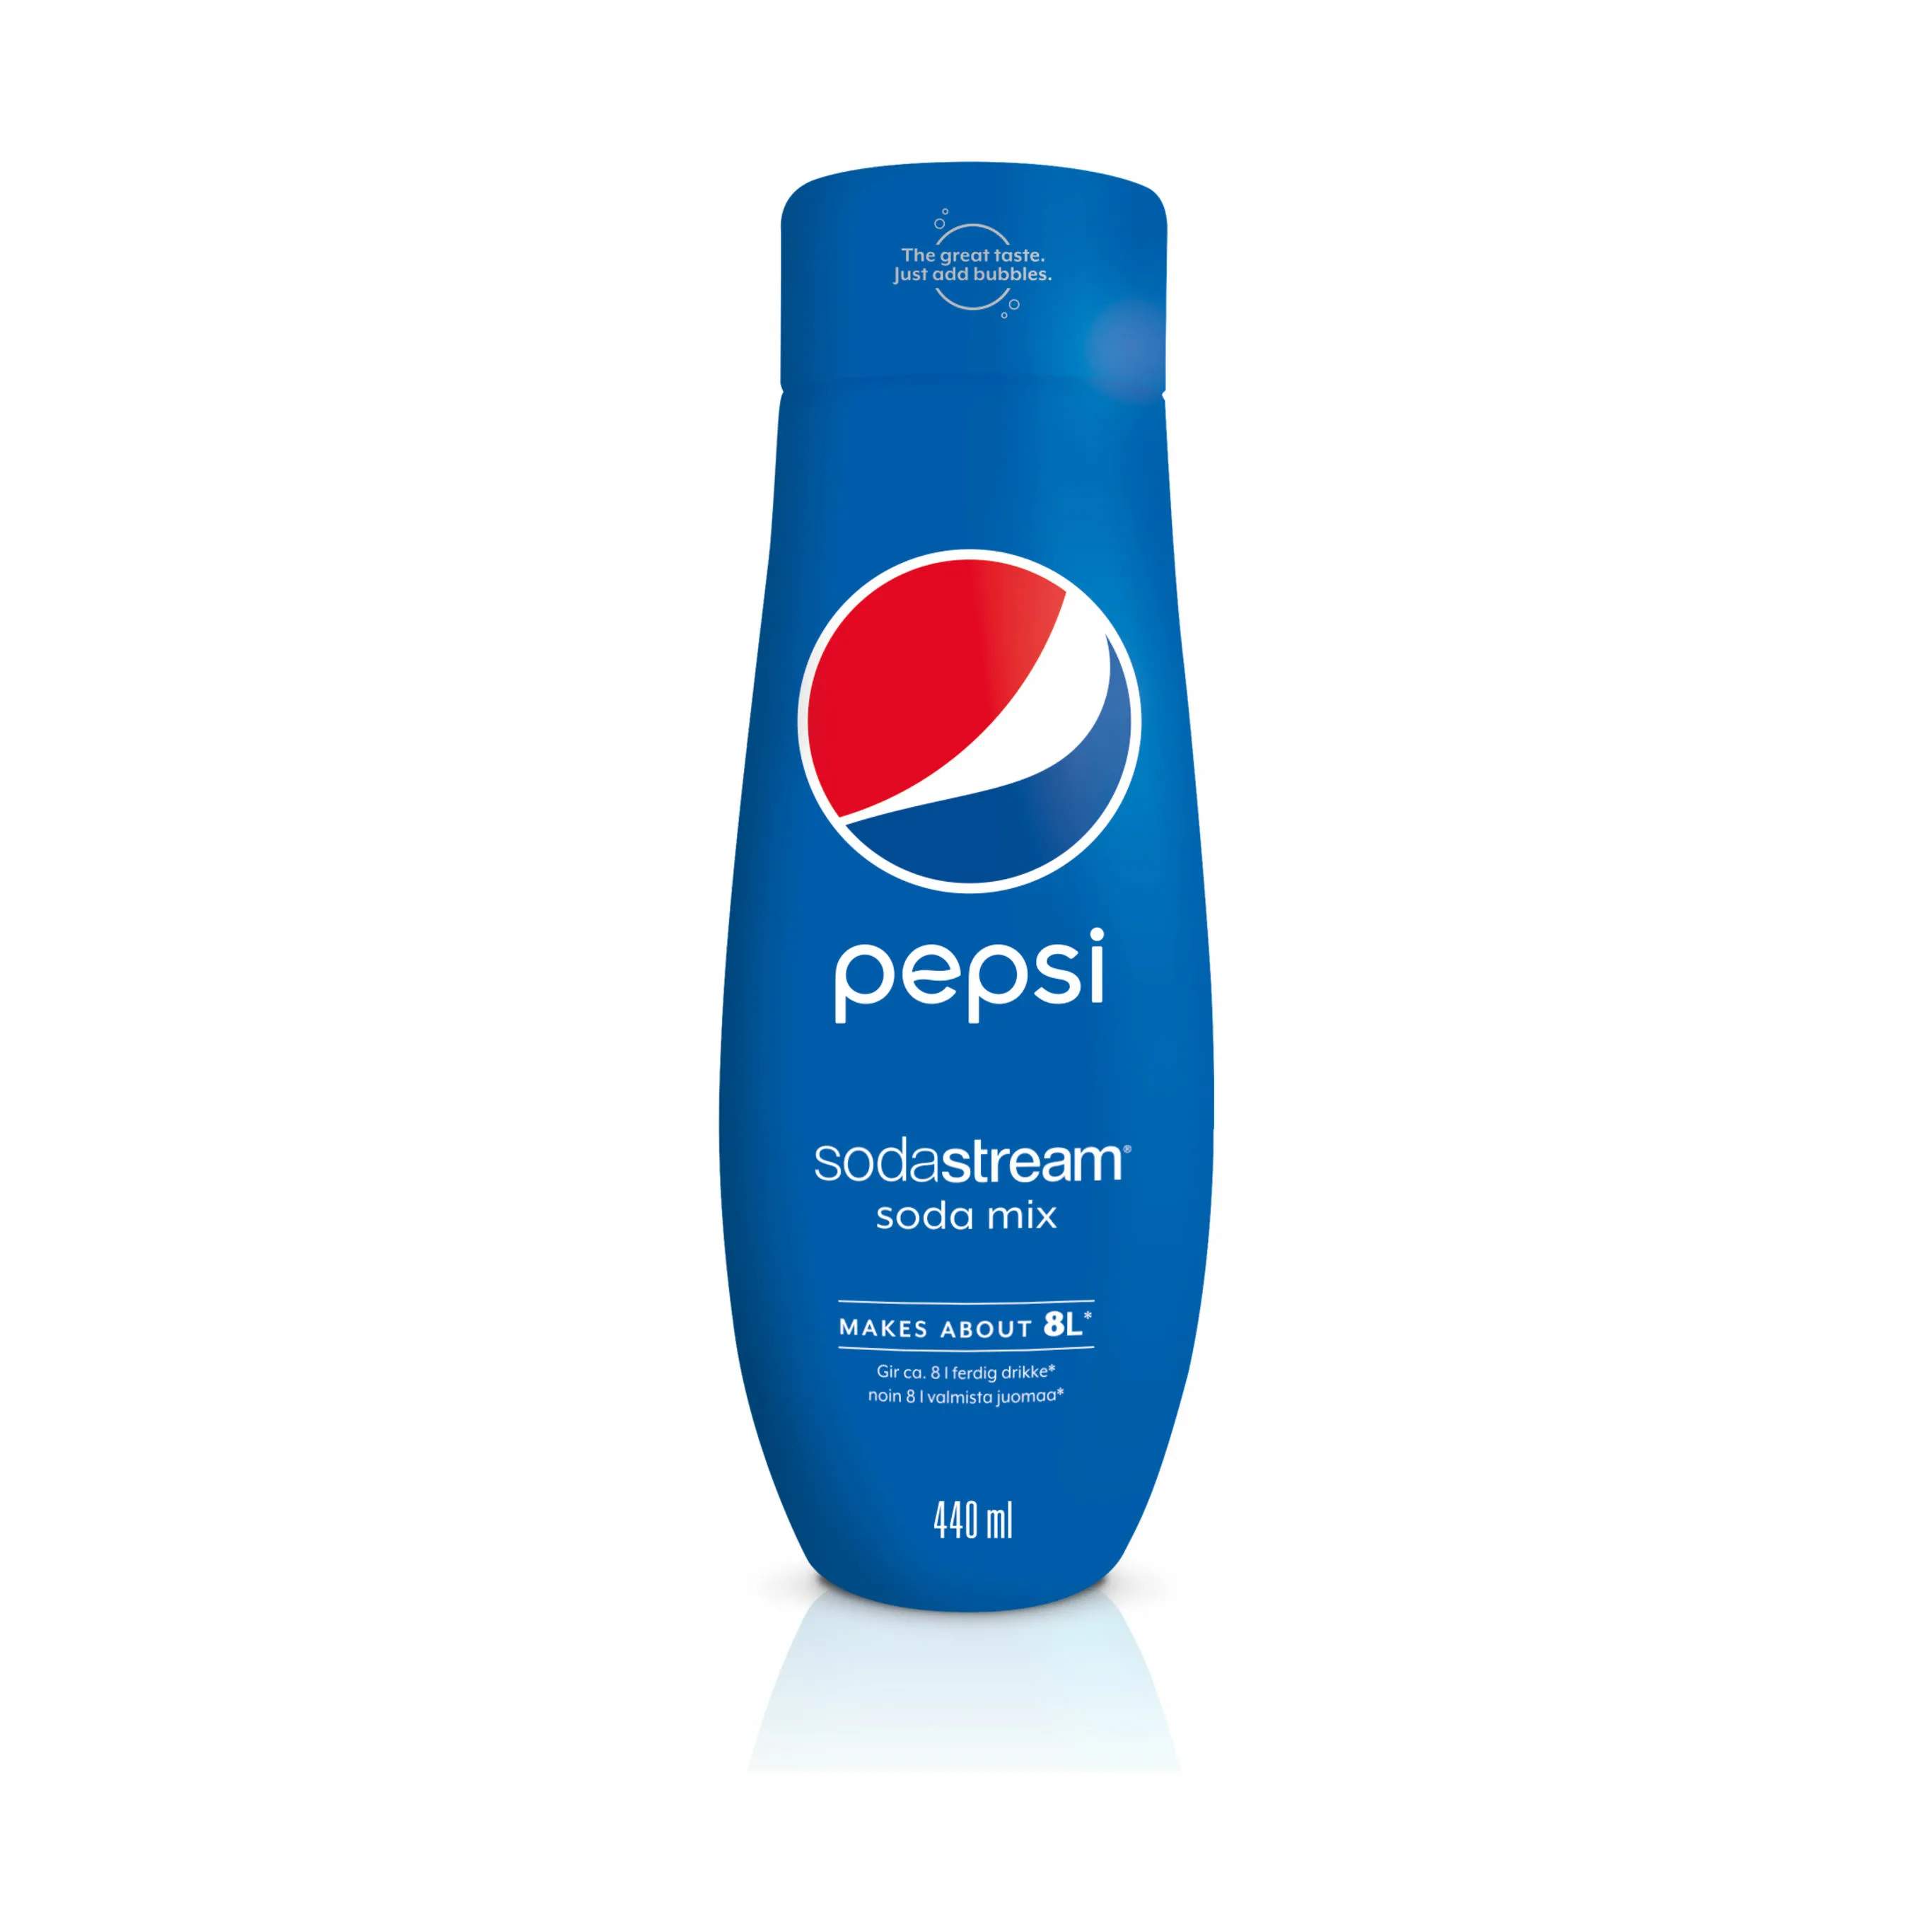 Sirup - Pepsi, blå, large